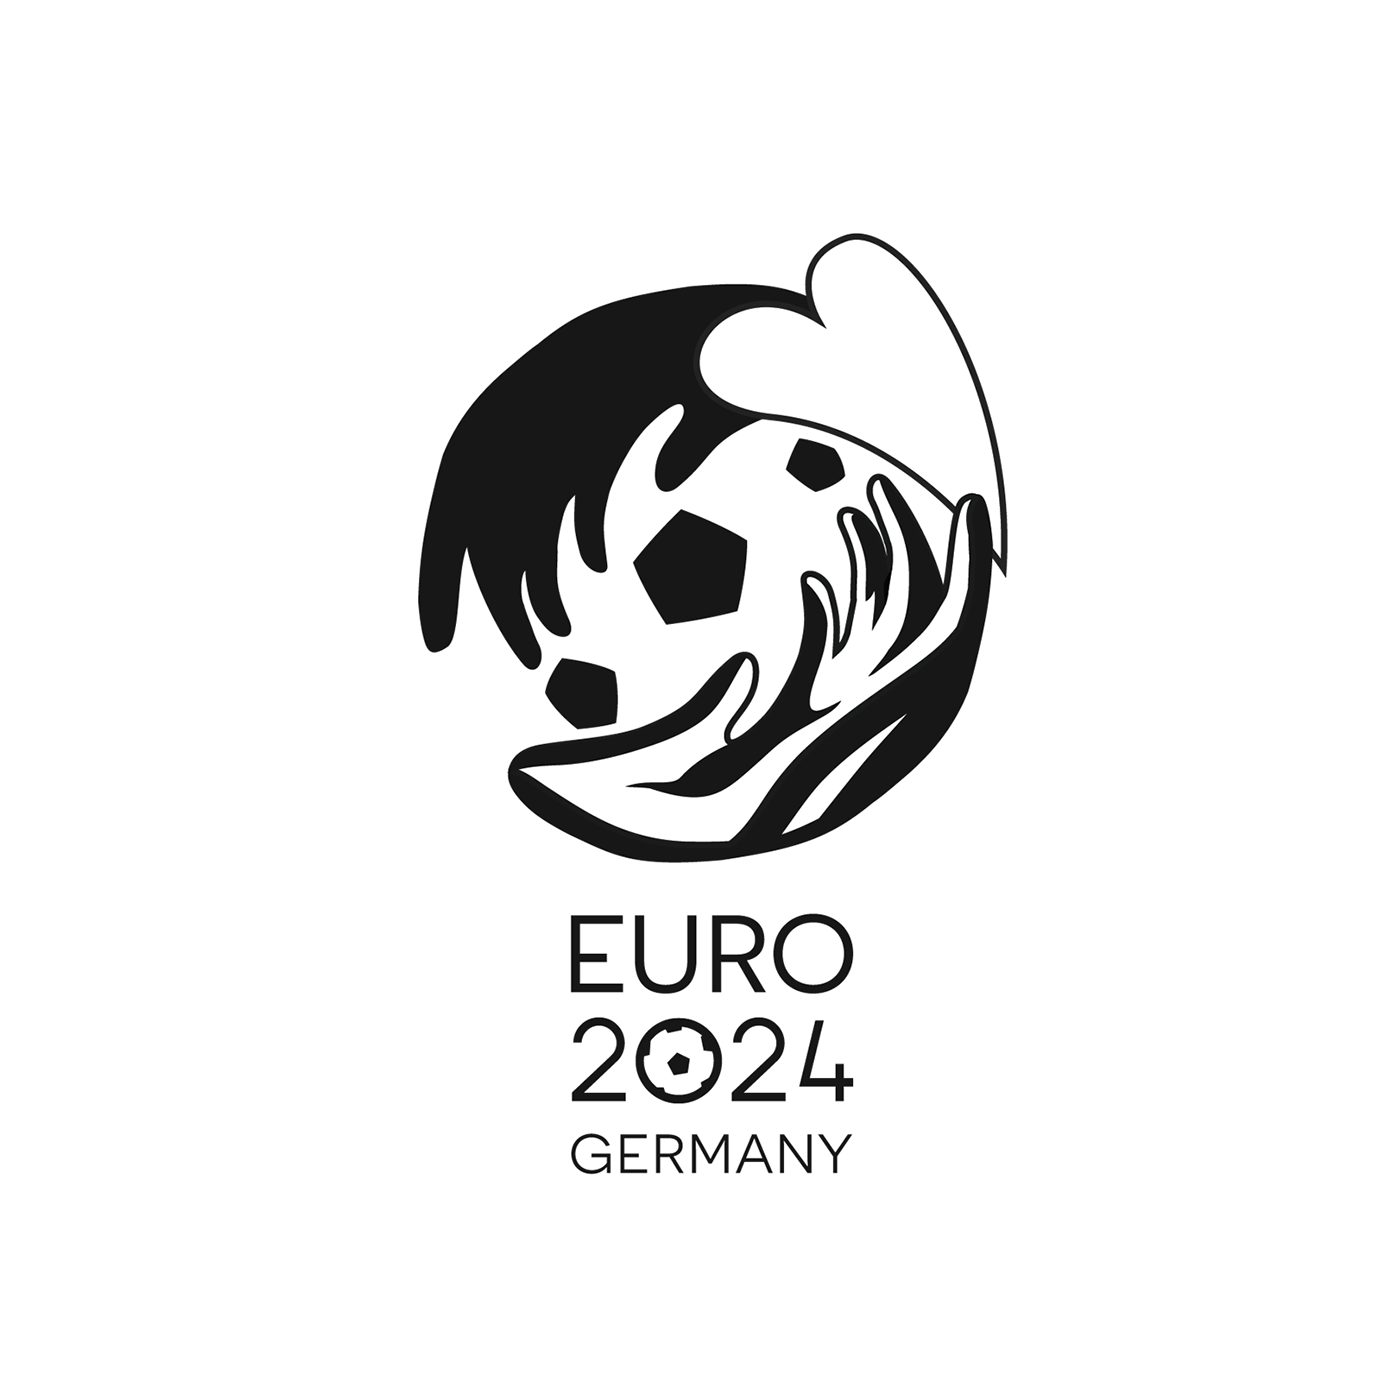 Парк лого 2024. Euro 2024 Germany. Логотип 2024. Euro 2024 logo. Модные логотипы 2024.